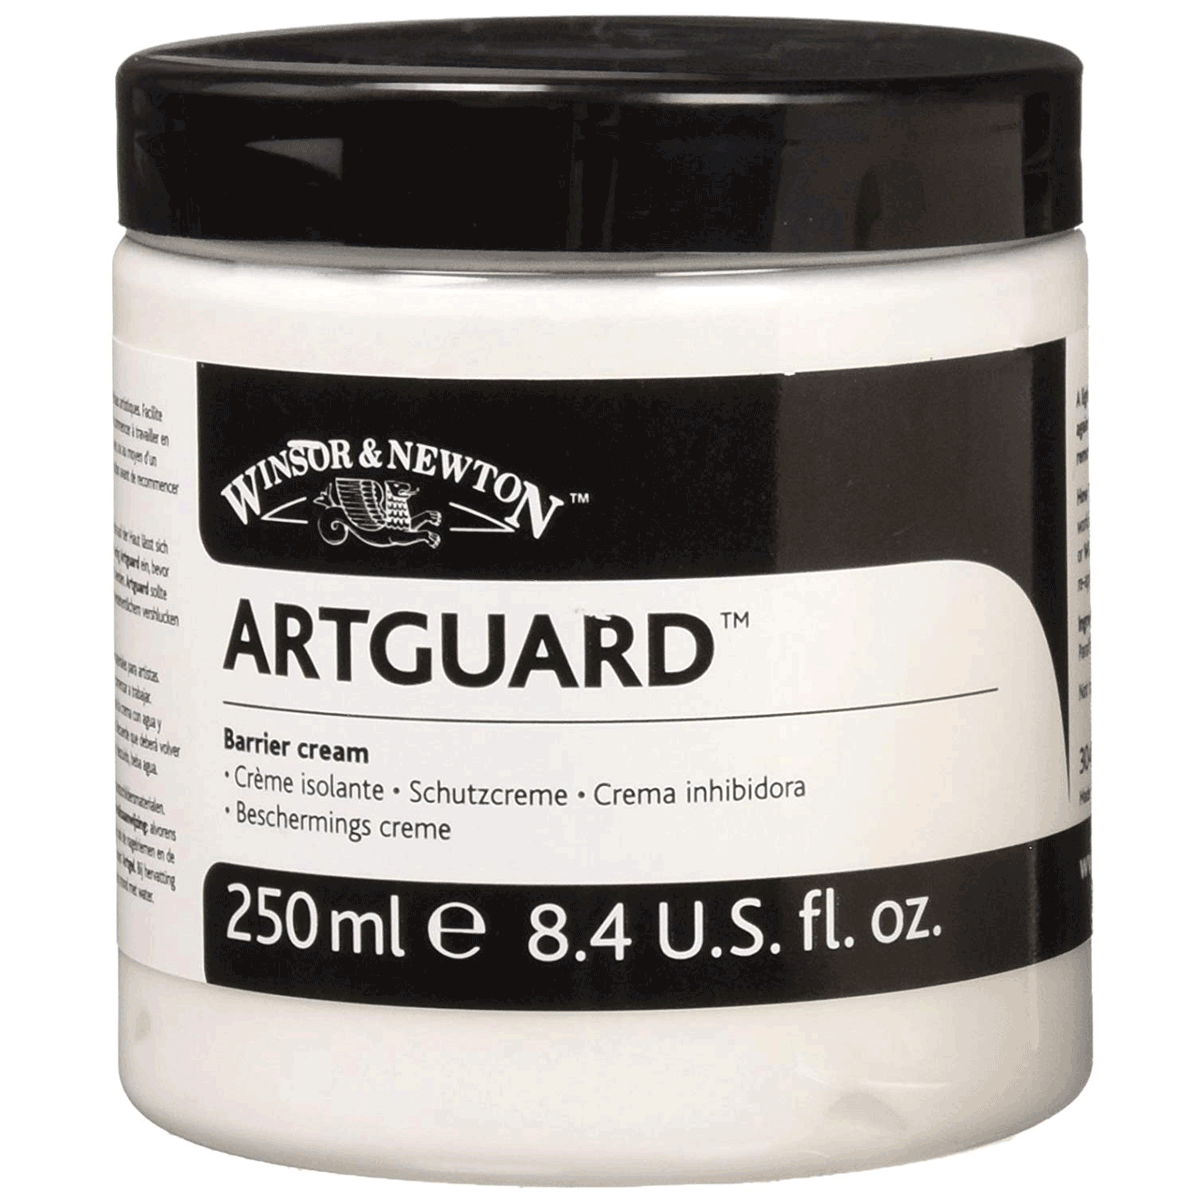 Winsor & Newton Artguard Barrier Cream 250ml